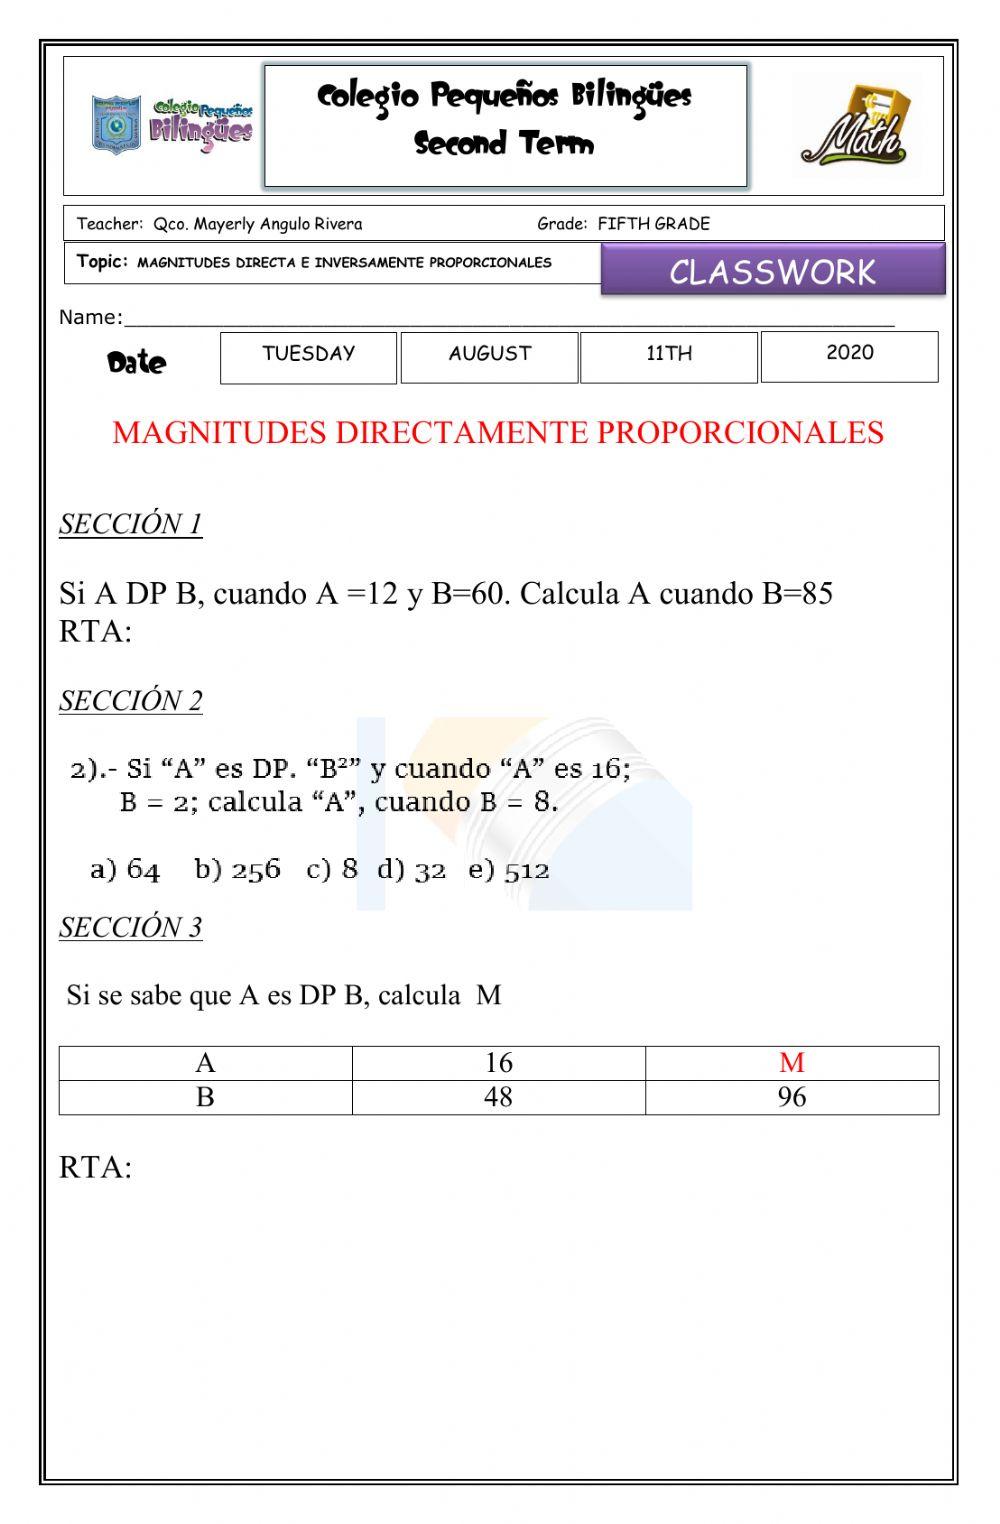 Magnitudes directamente proporcionales taller en clase agosto 11 de 2020